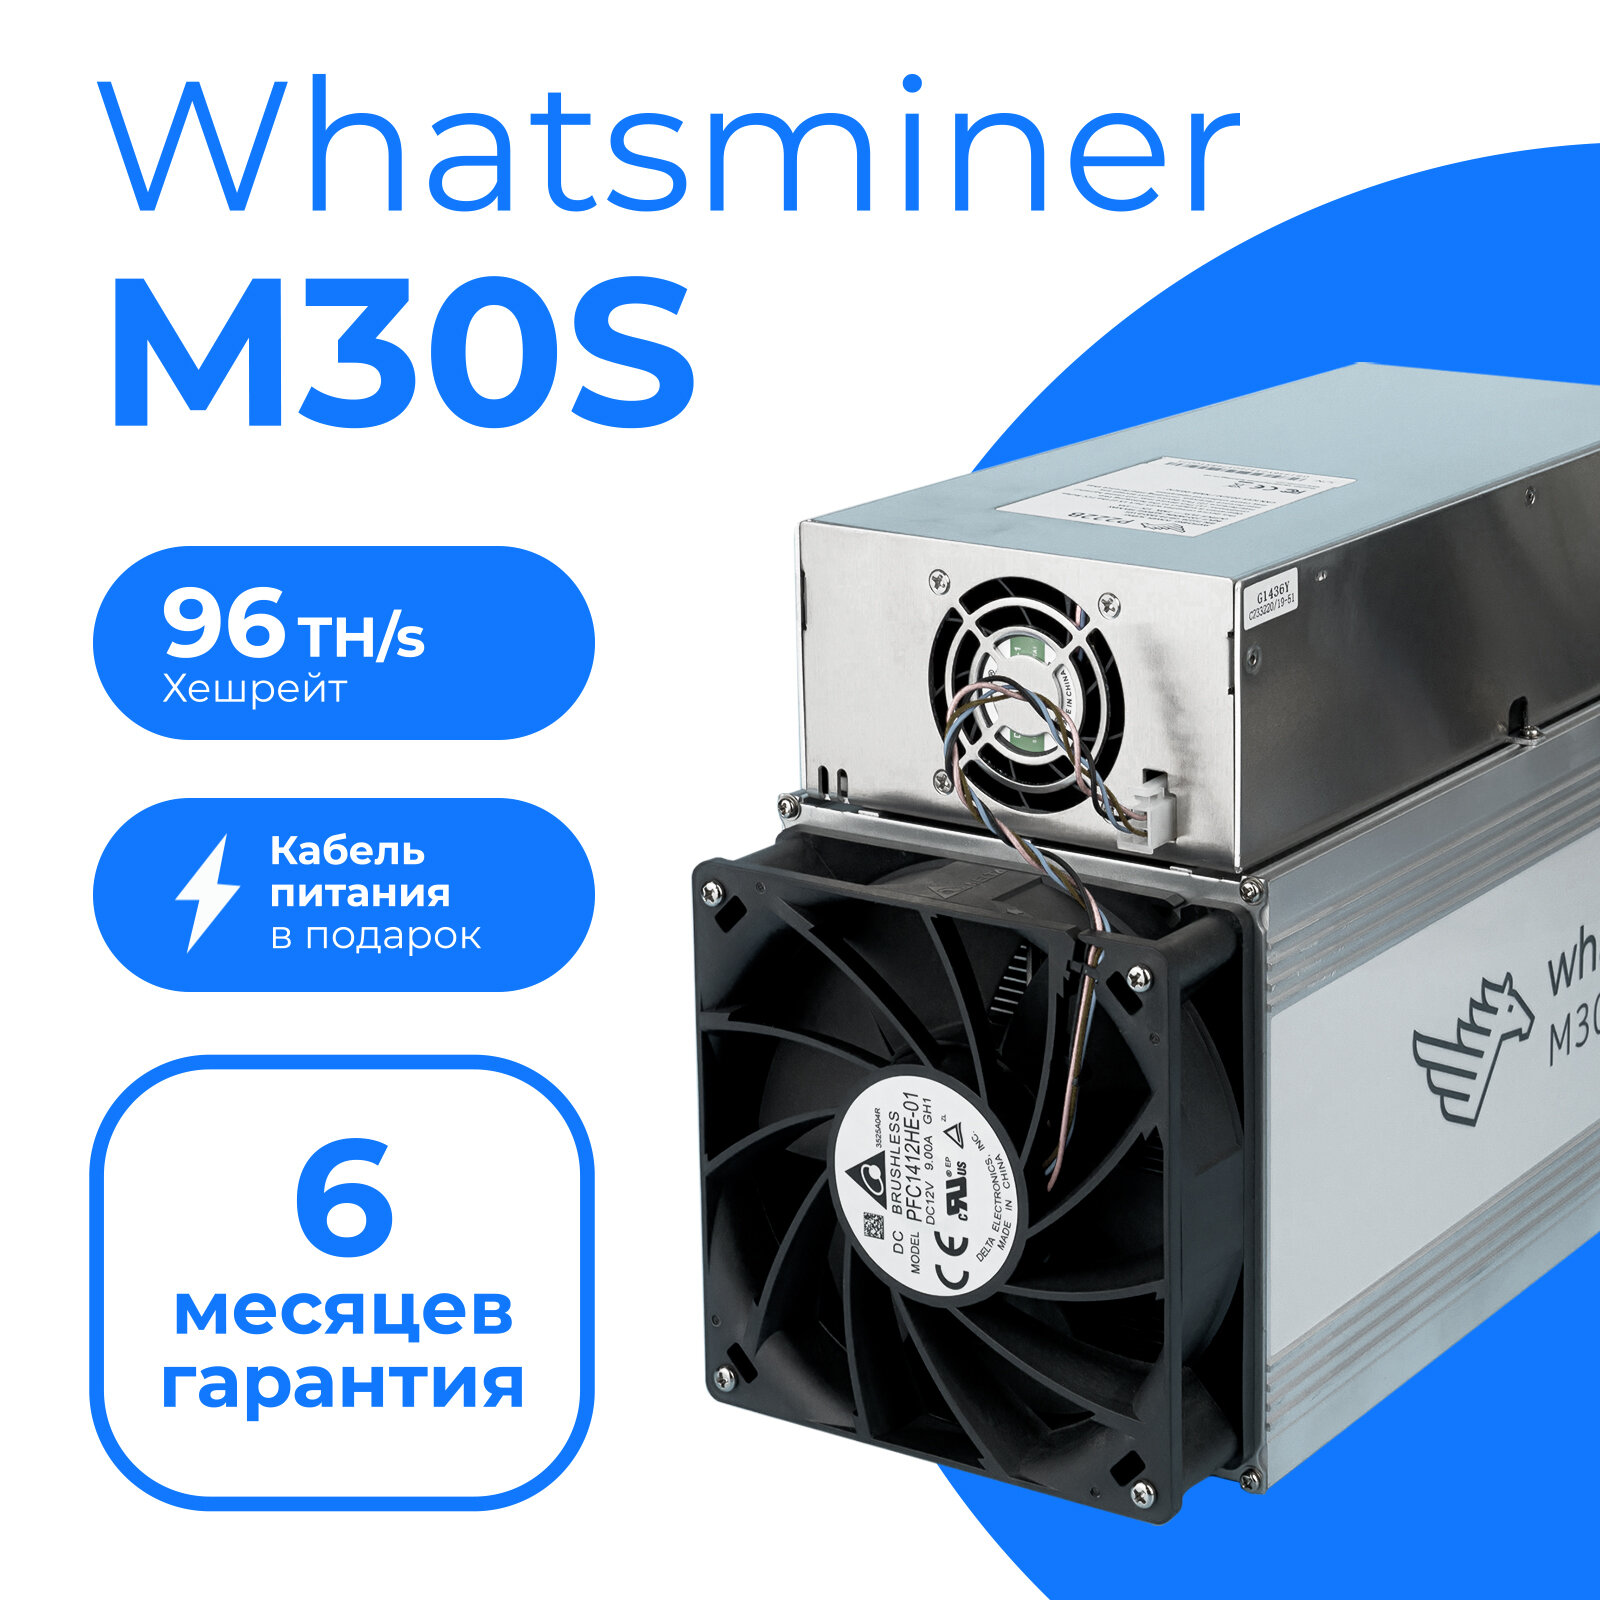 Асик майнер Whatsminer M30S - 96TH/s (36W) + кабель C19 в комплекте